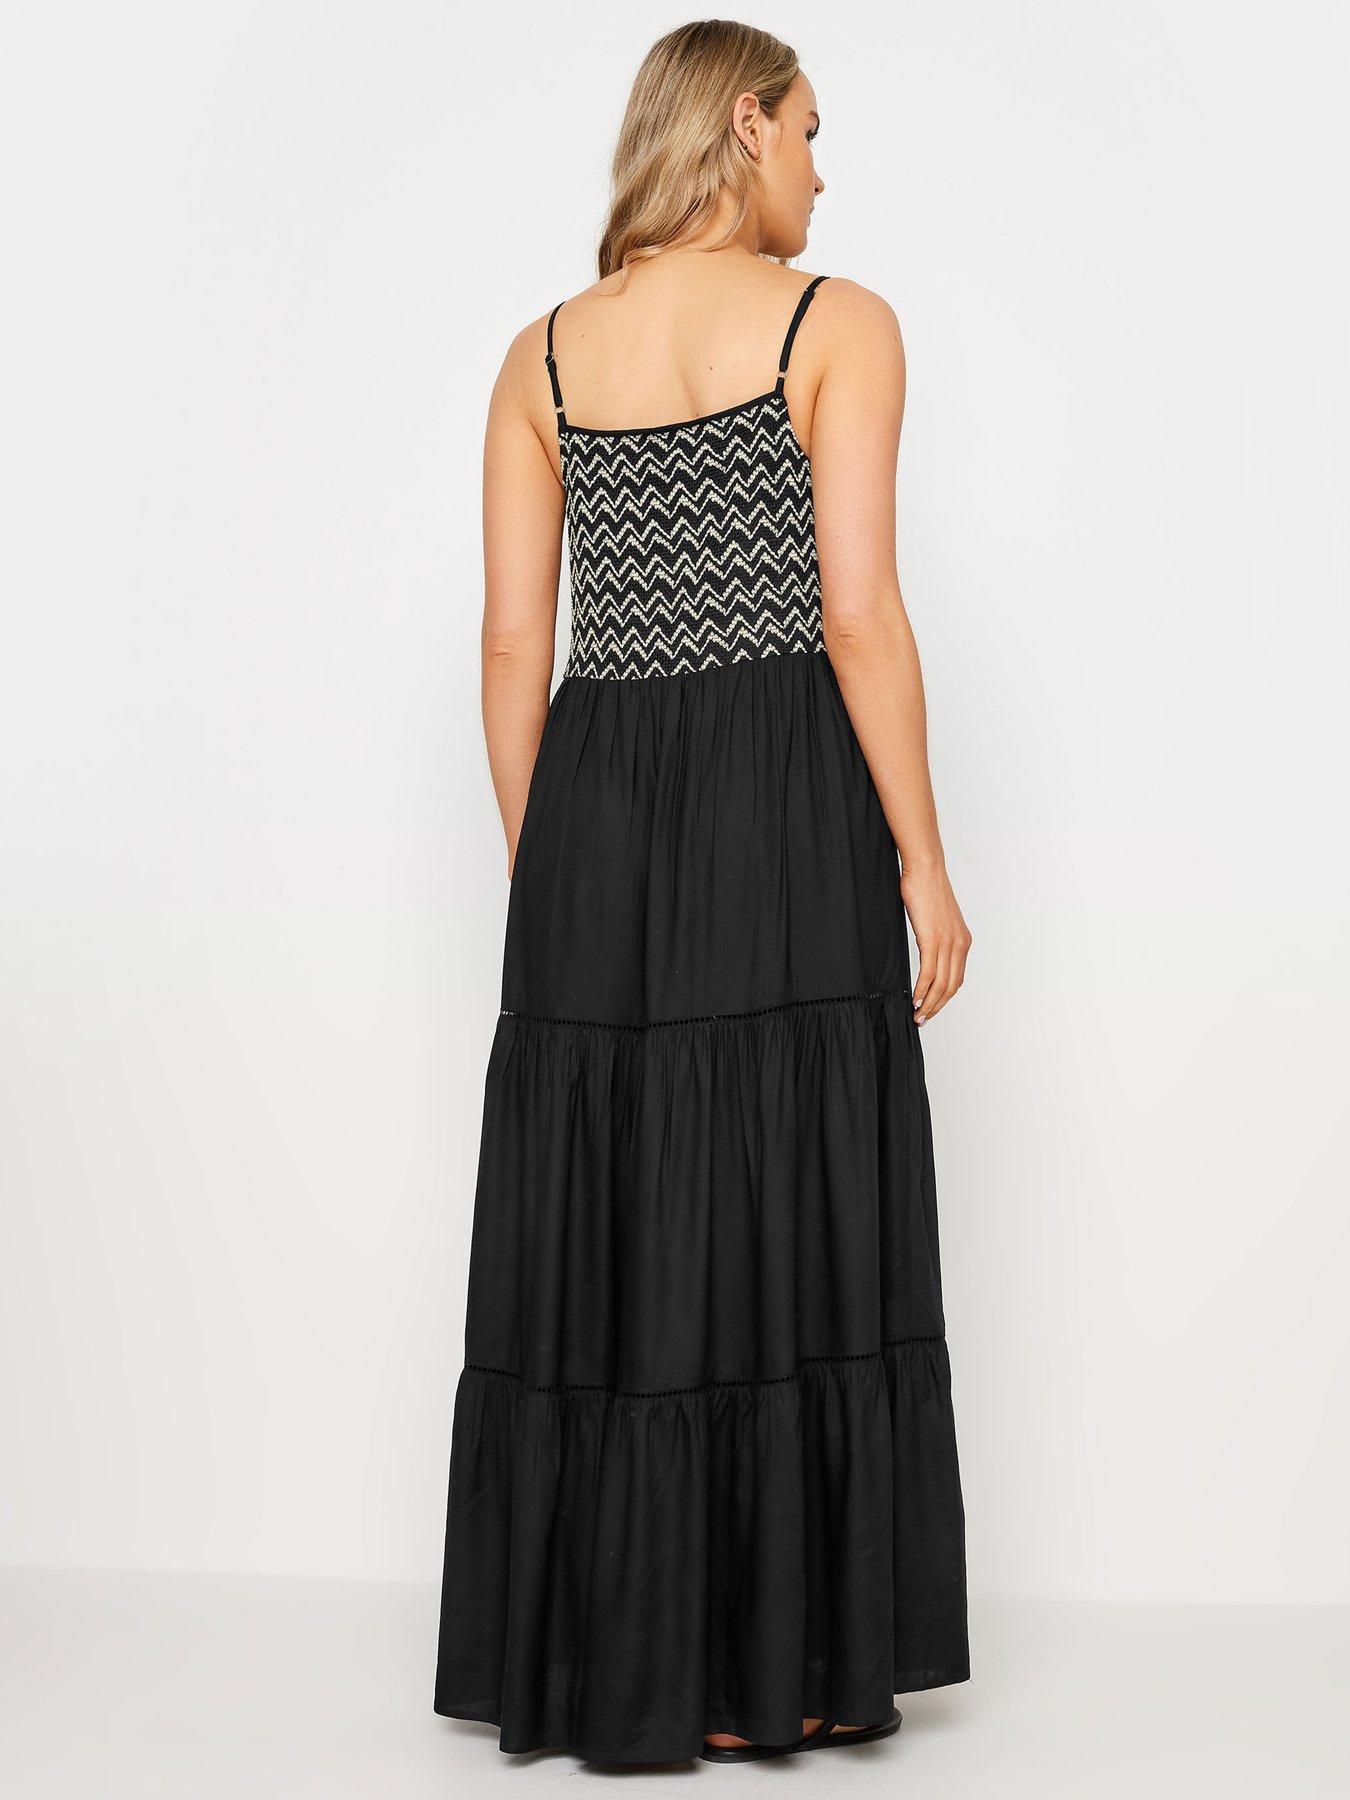 Long Tall Sally Zig Zag Embroidered Dress (Tall) - Black | Very.co.uk